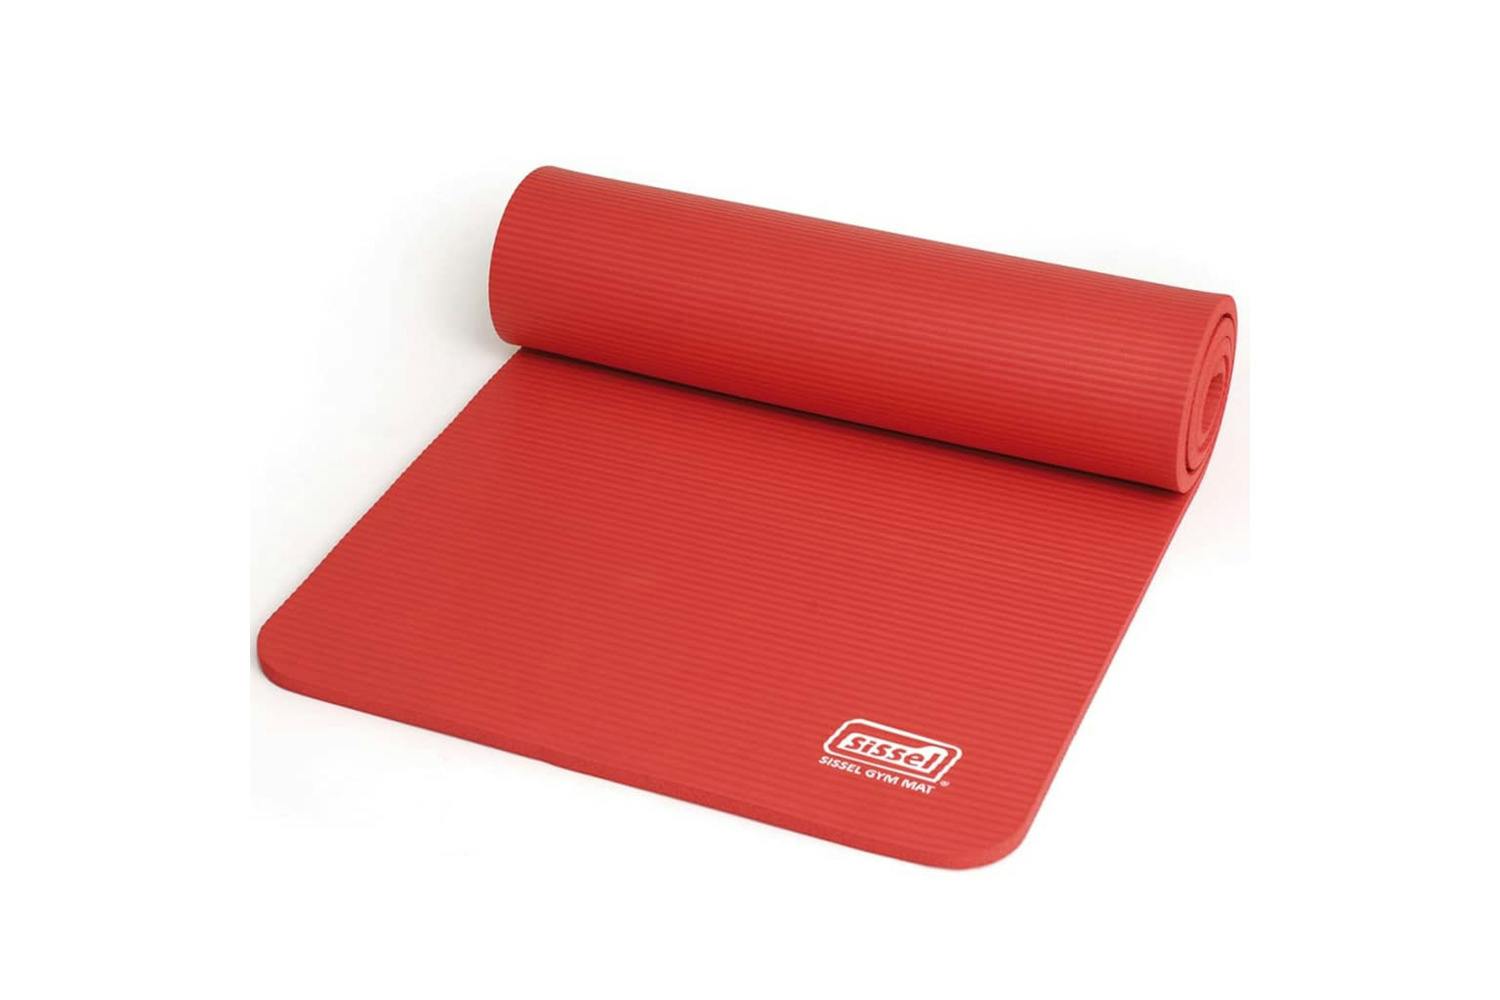 Smart Yoga Mat for Women, Yoga Mat for Men Exercise Mats | Non Slip Yoga  Mat With Built-in Workout Timer, Phone/ Tablet Stand | Workout Mat Pilates